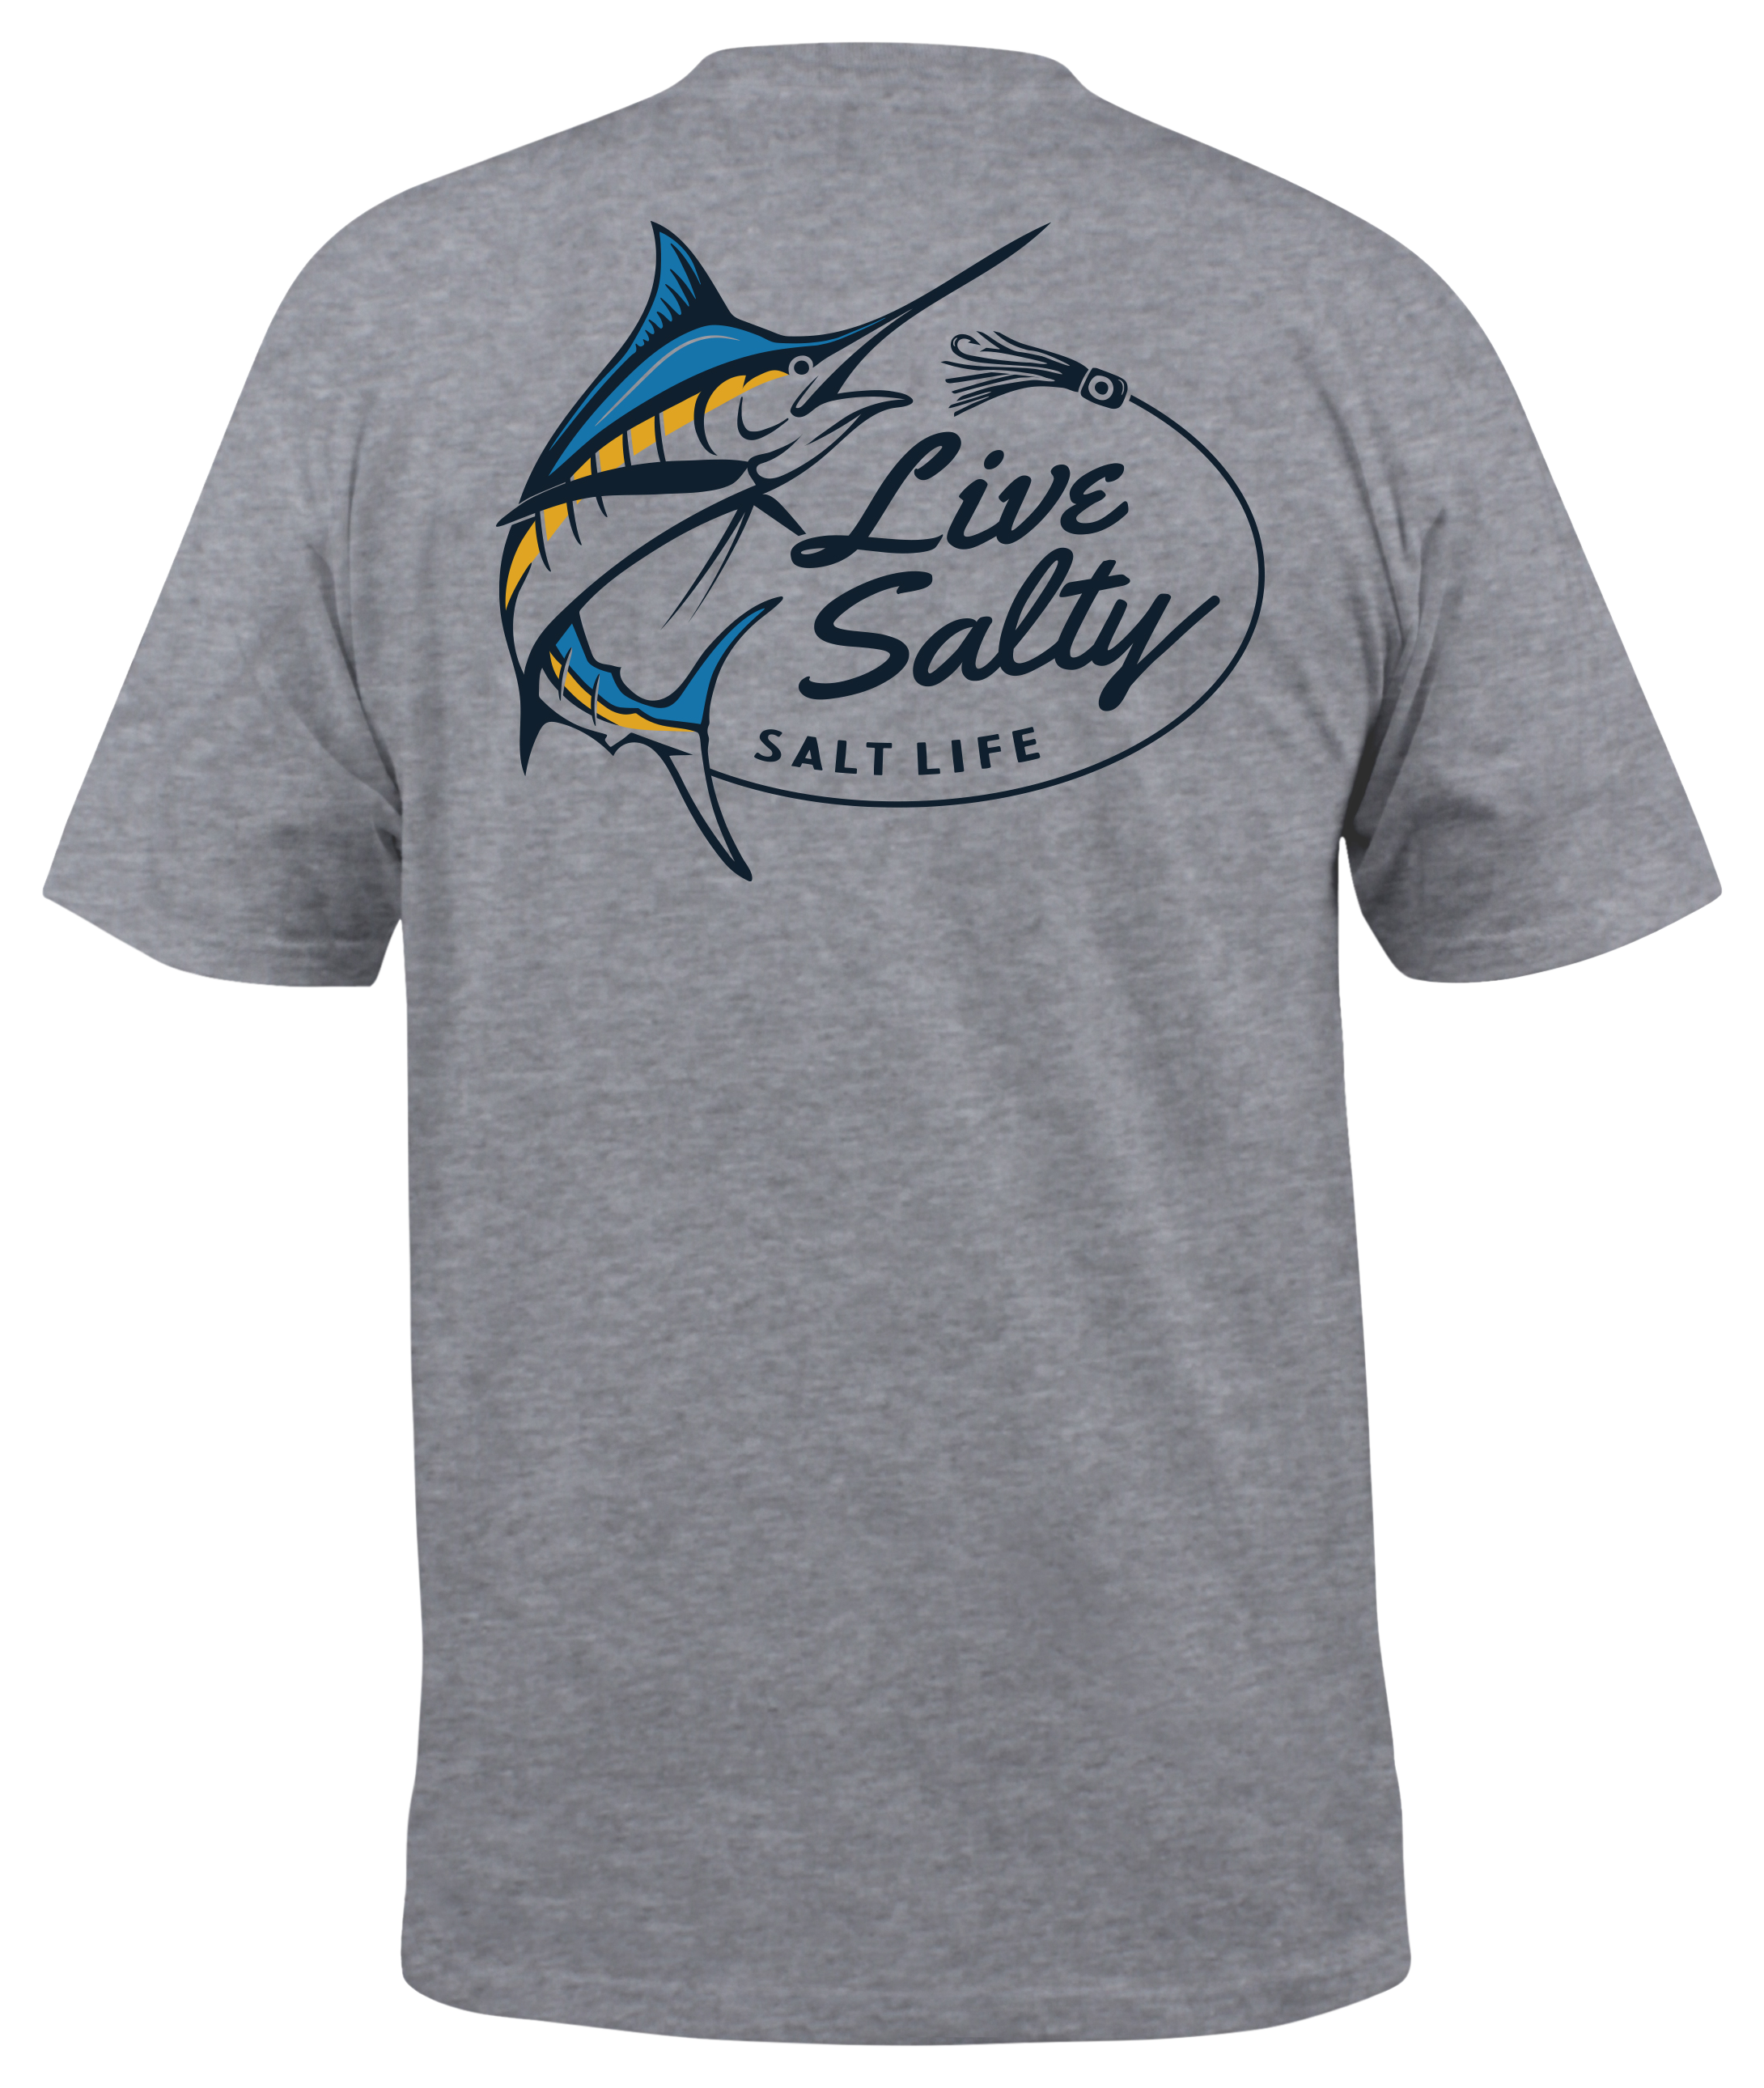 Salt Life Salty Marlin Short-Sleeve Shirt for Men